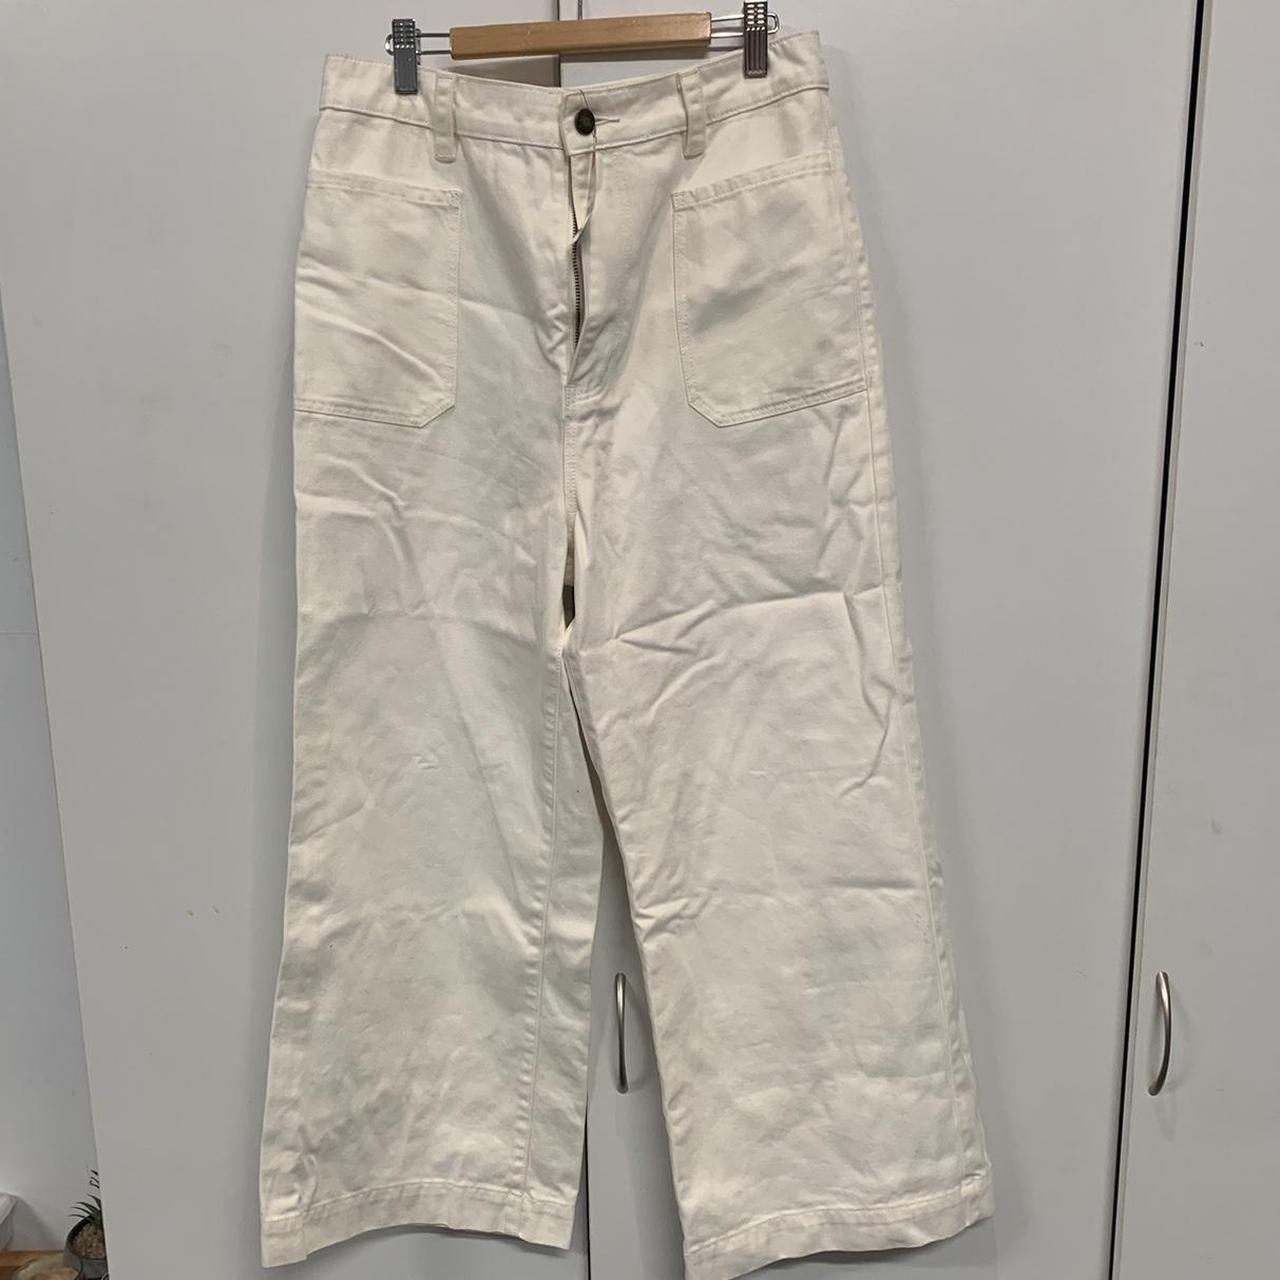 Jeans - SPORTSGIRL Size 14 (potentially more... - Depop